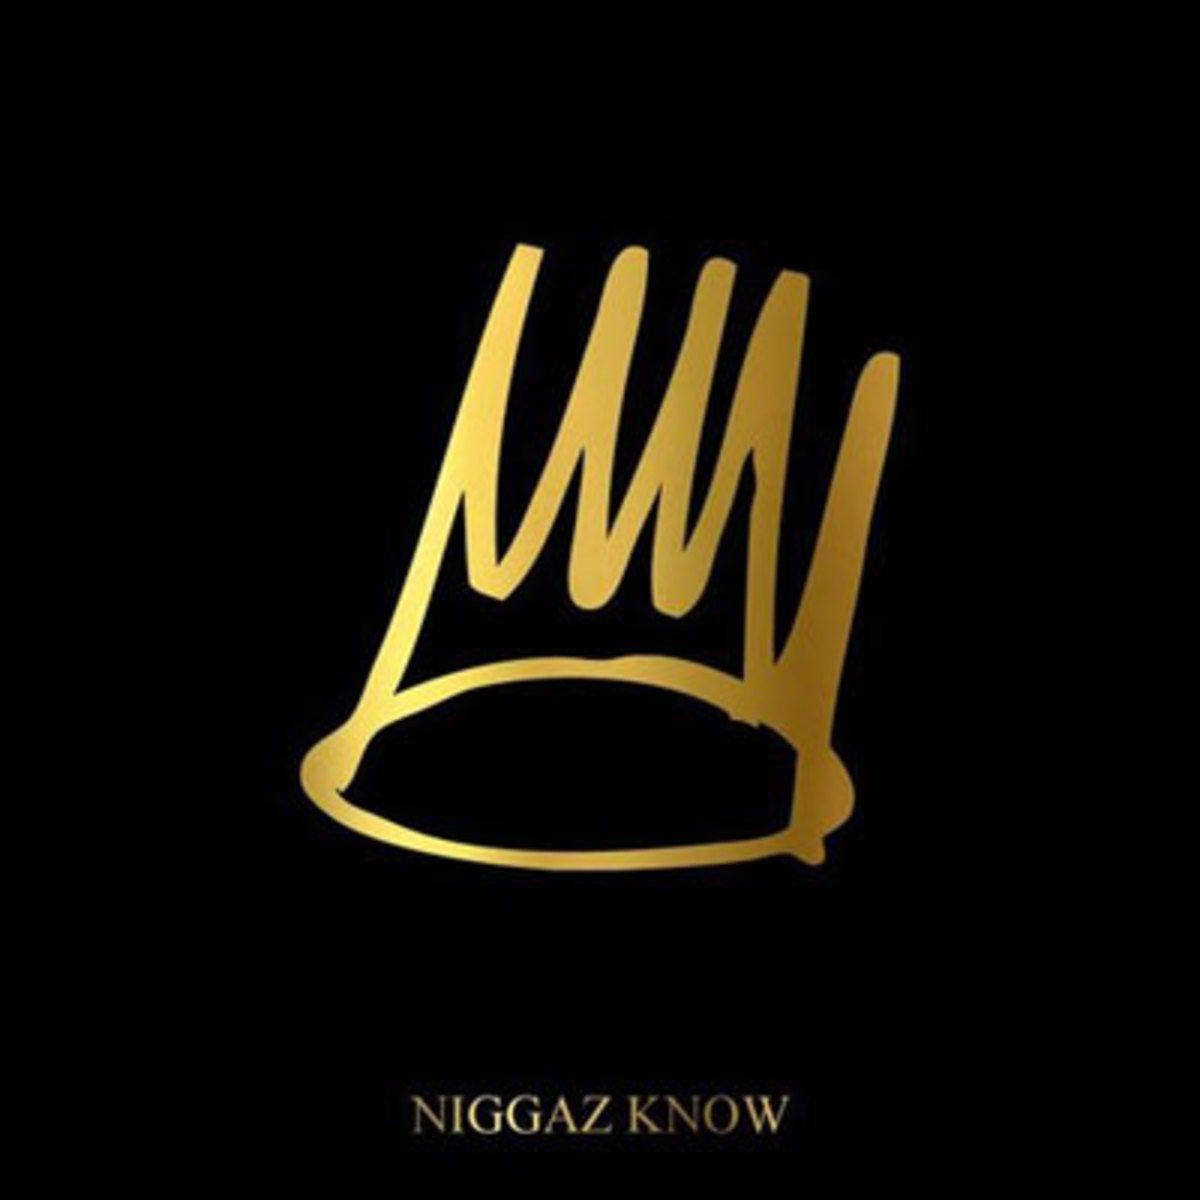 J Cole Logo - J. Cole - N*ggaz Know - DJBooth